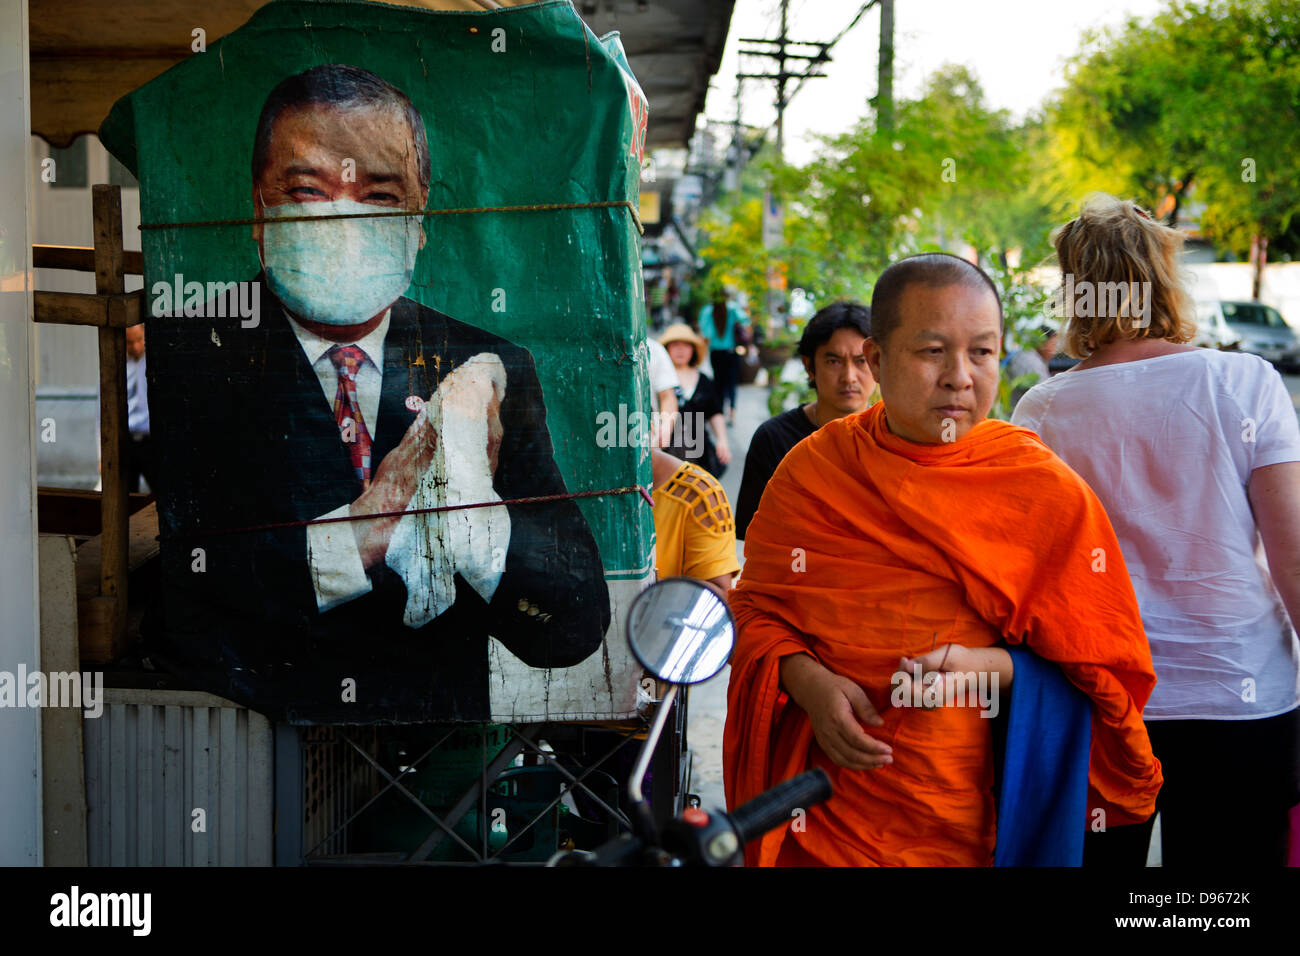 Buddhist monk passing street poster of man wearing hygiene mask Stock Photo